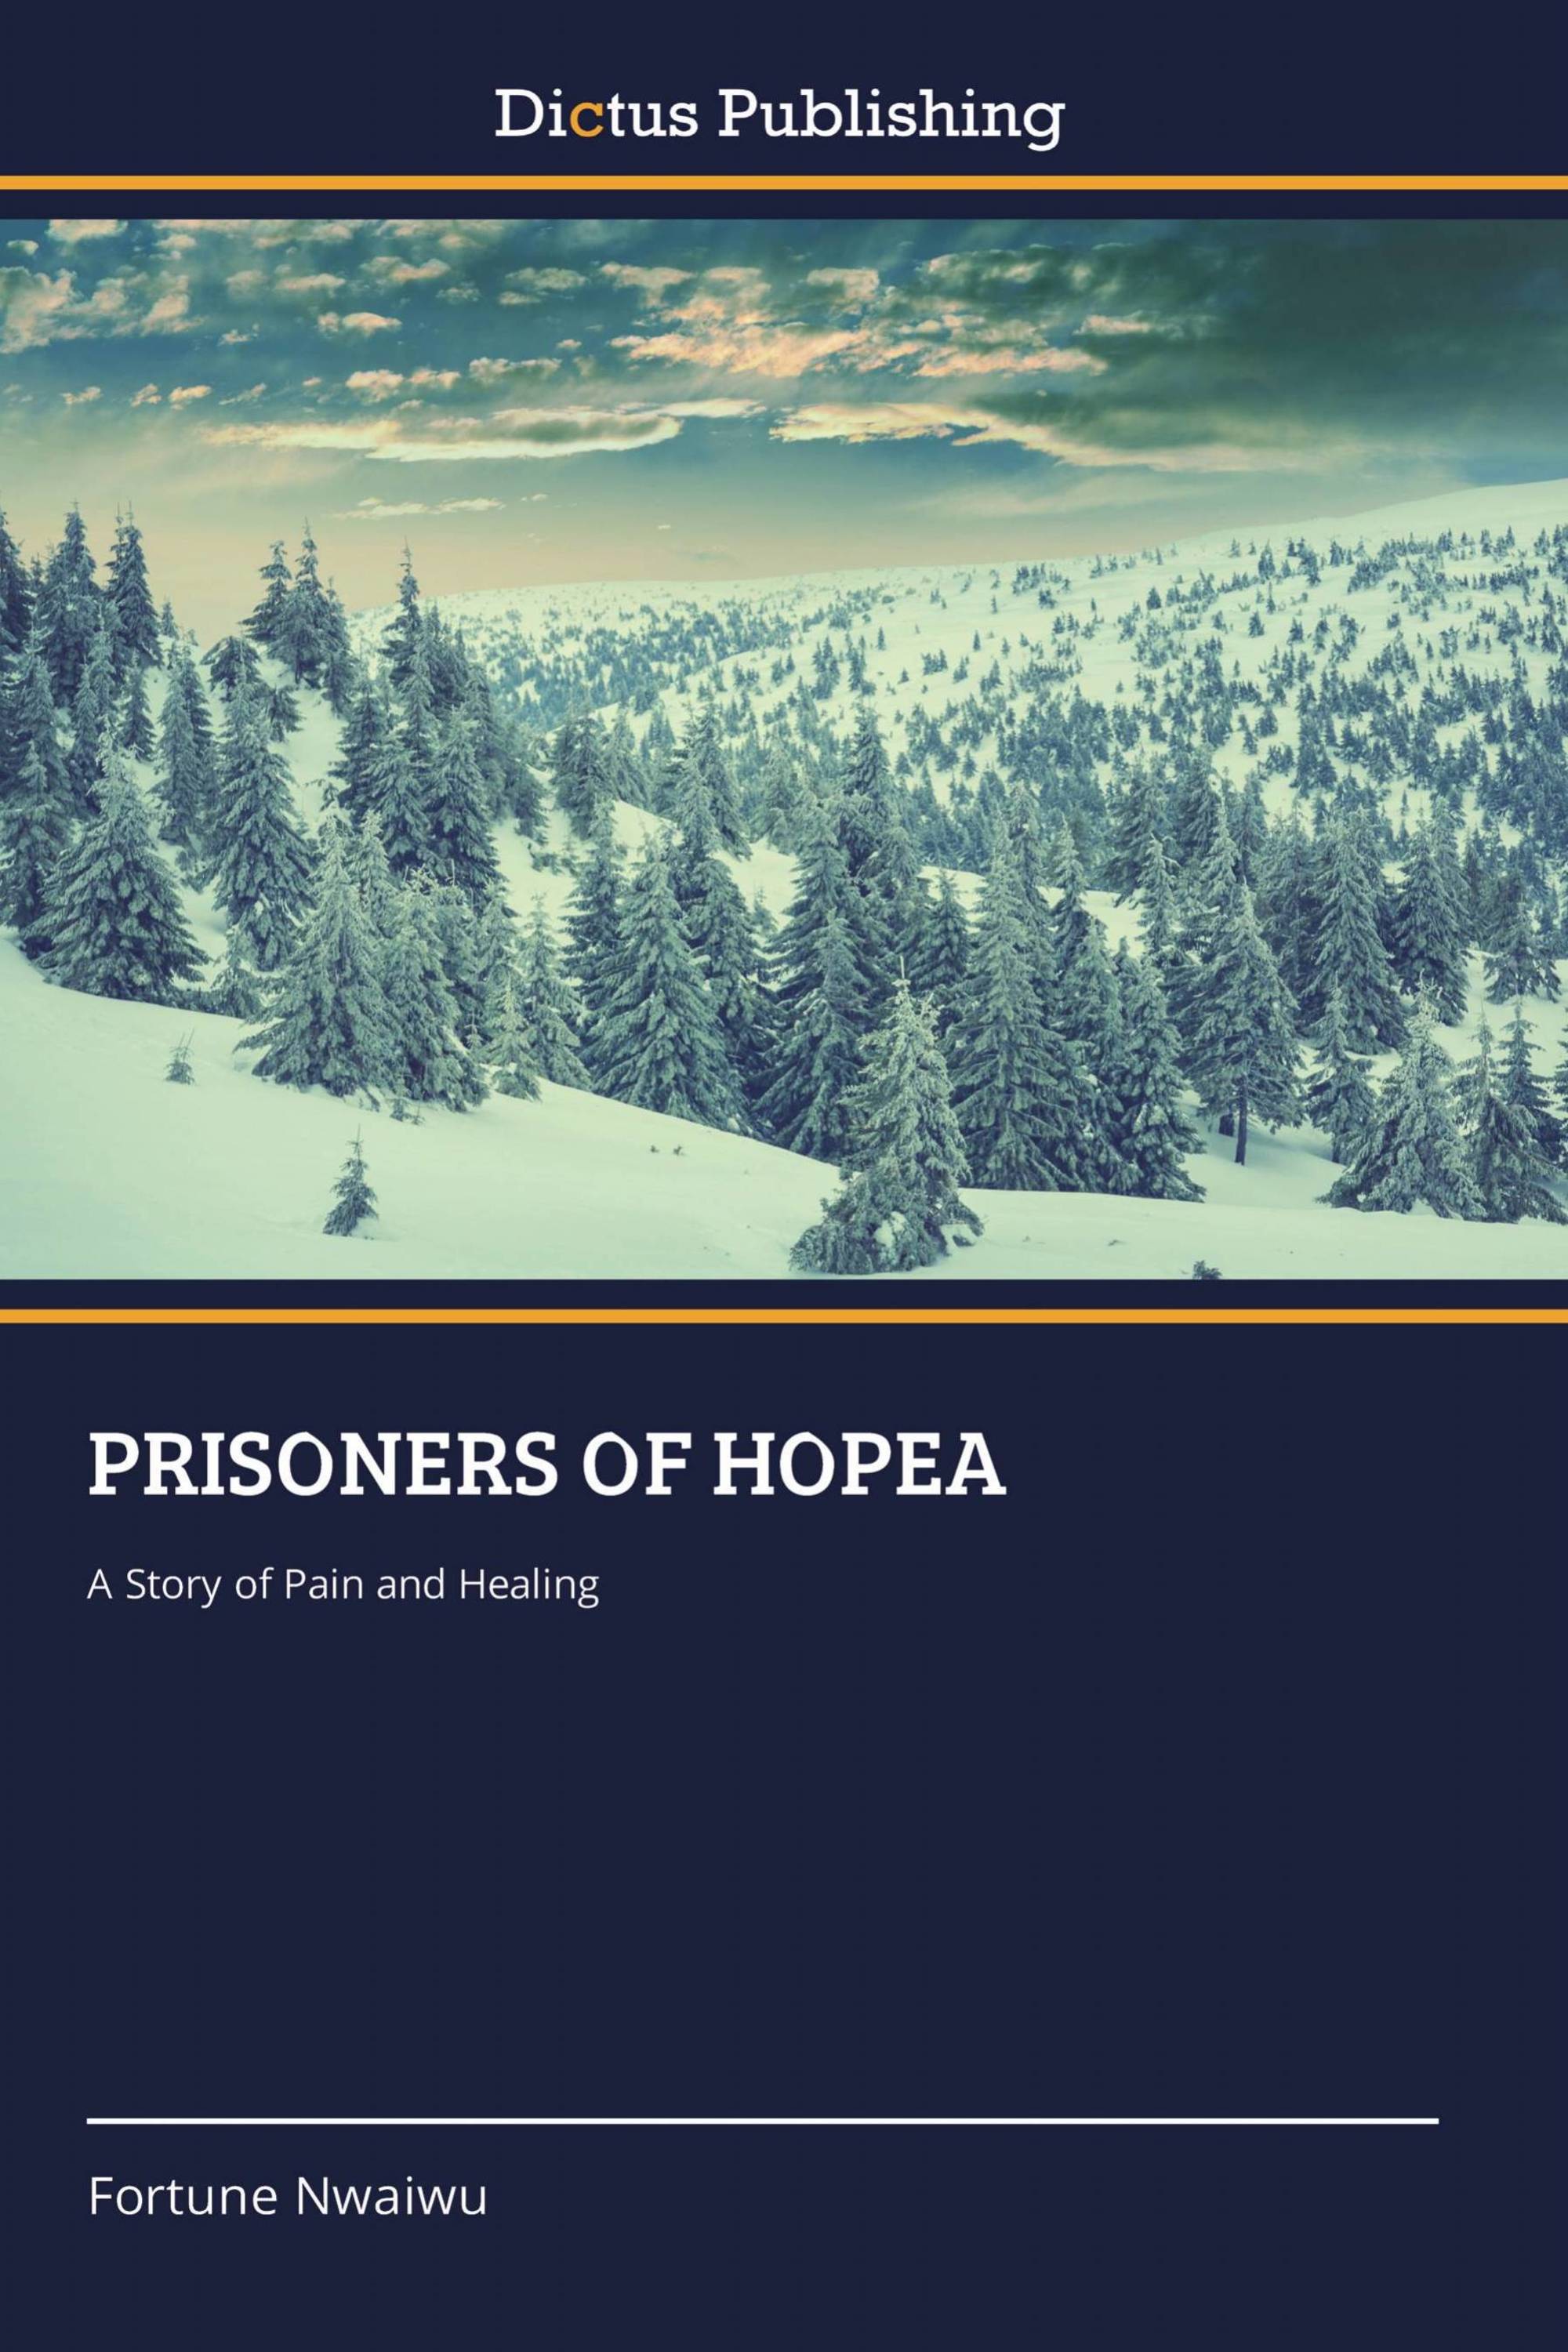 PRISONERS OF HOPEA